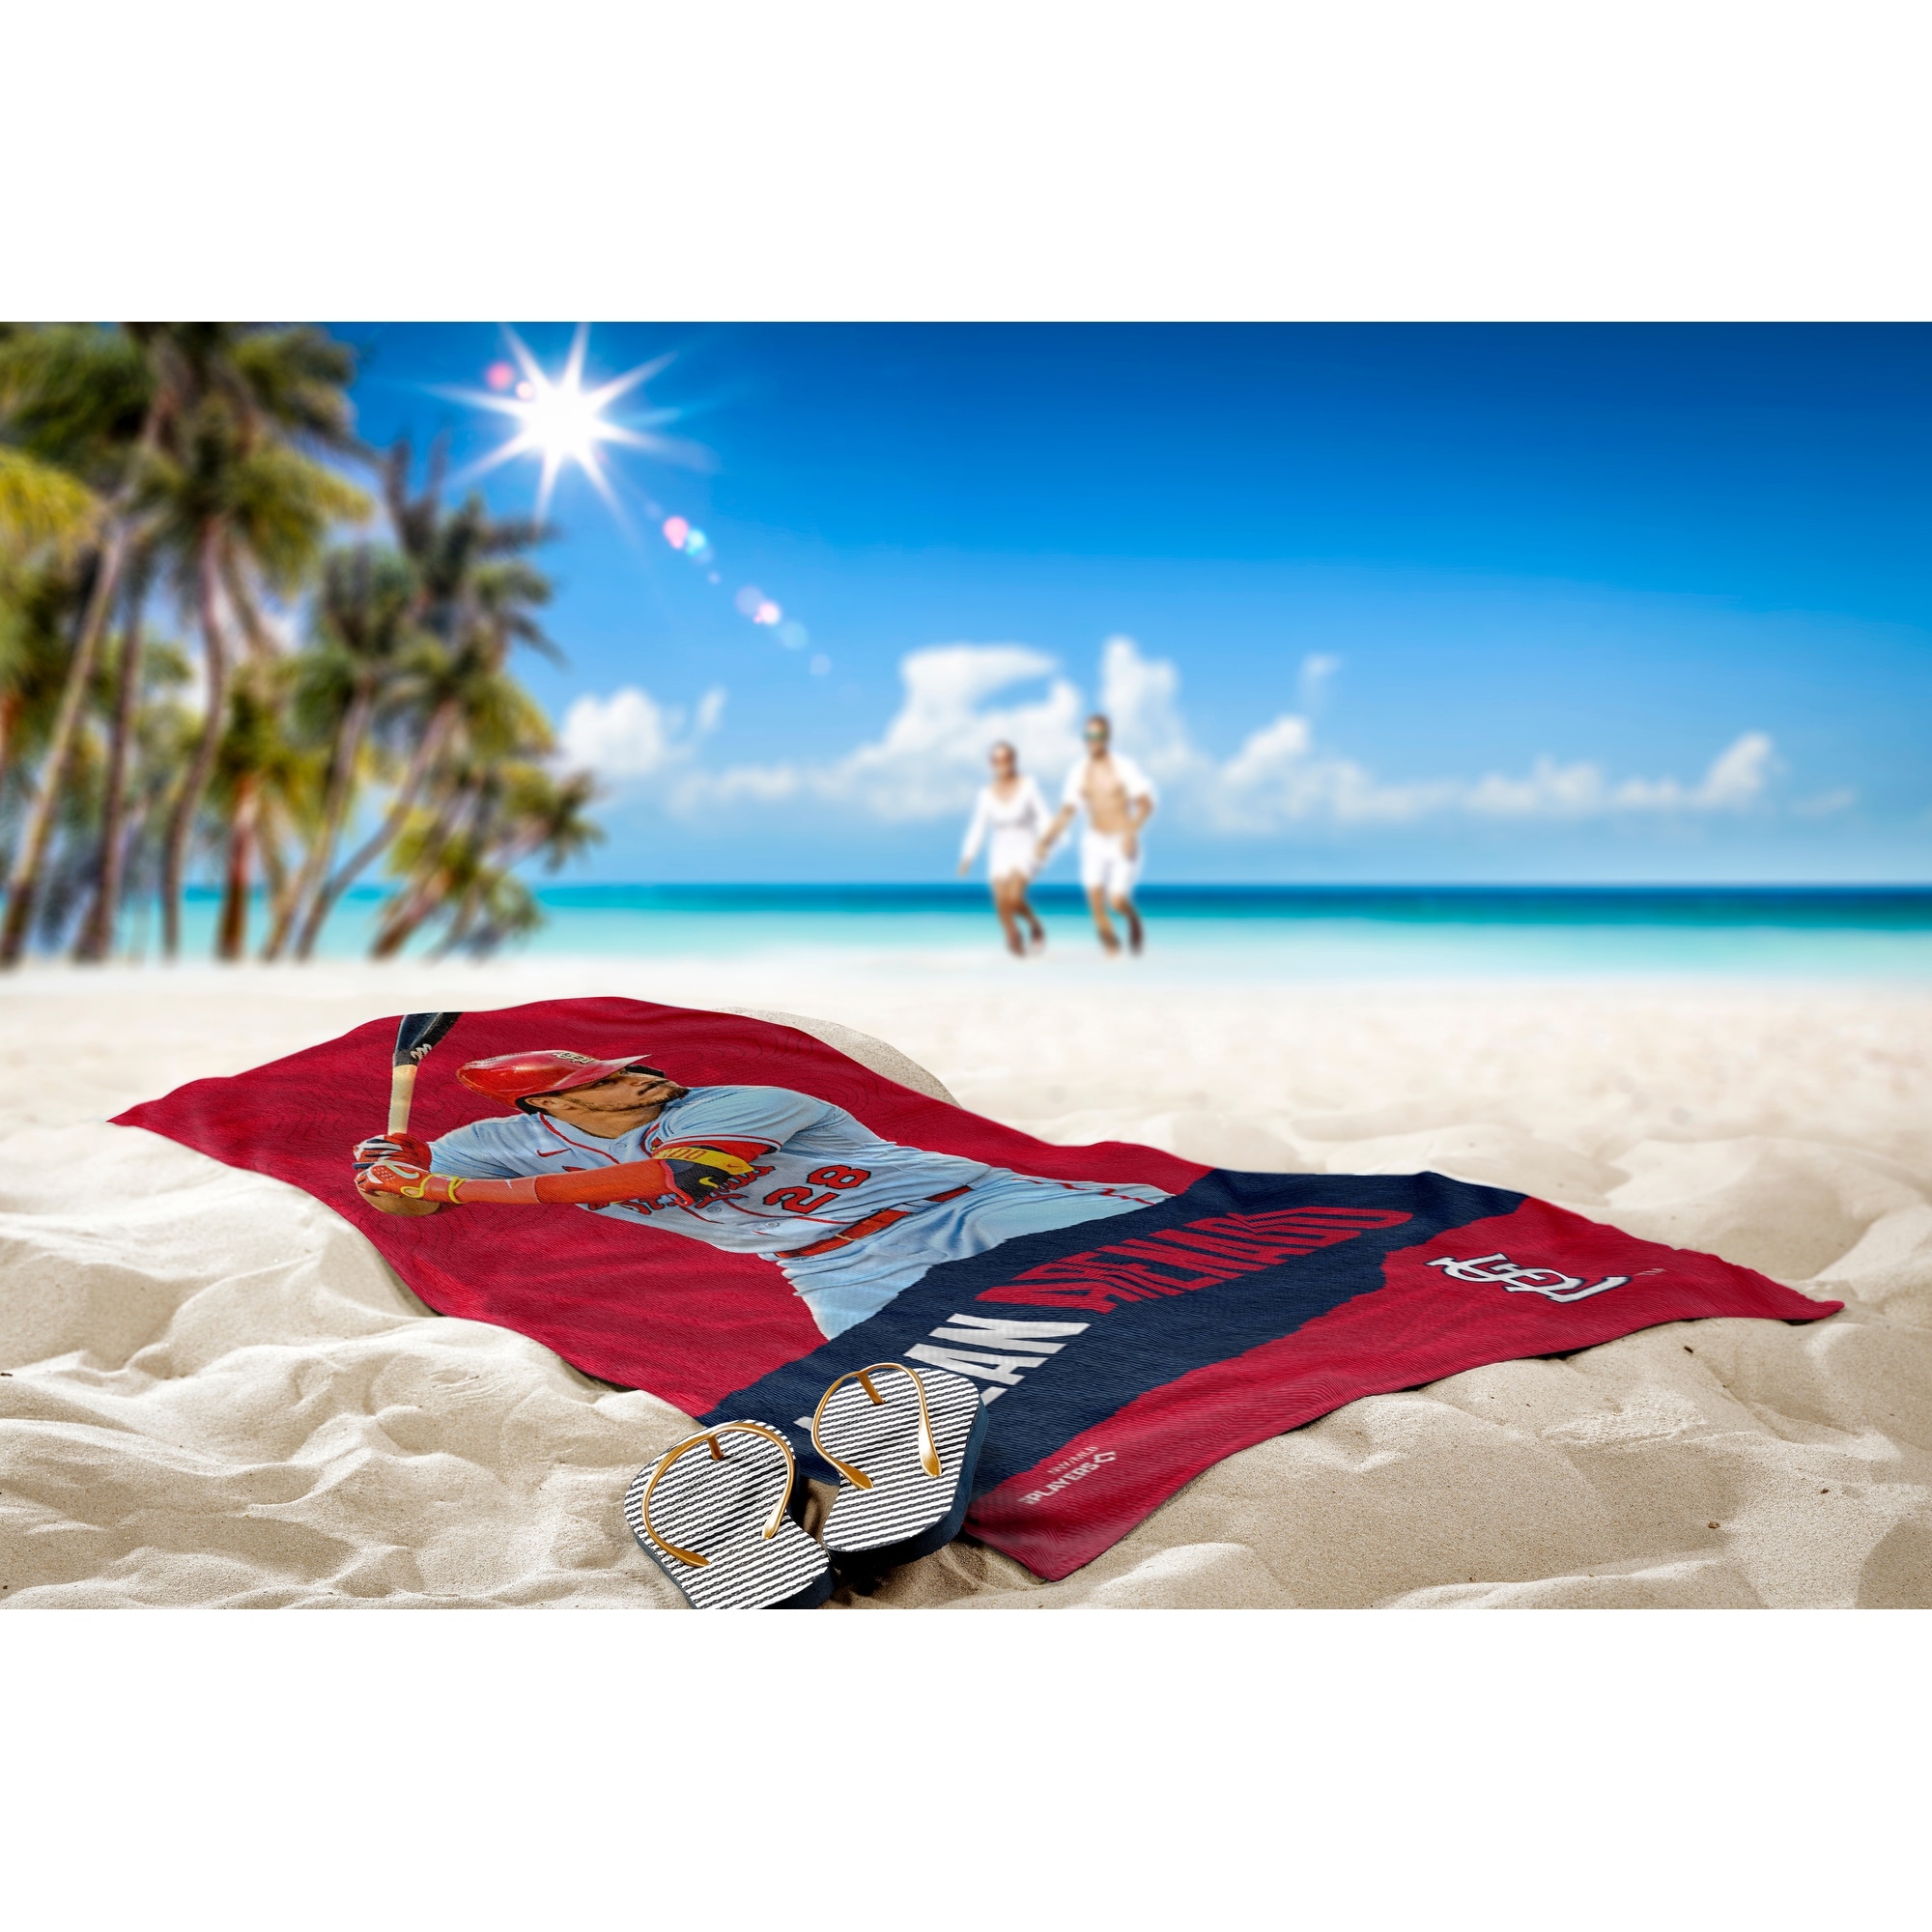 st louis cardinals beach towel